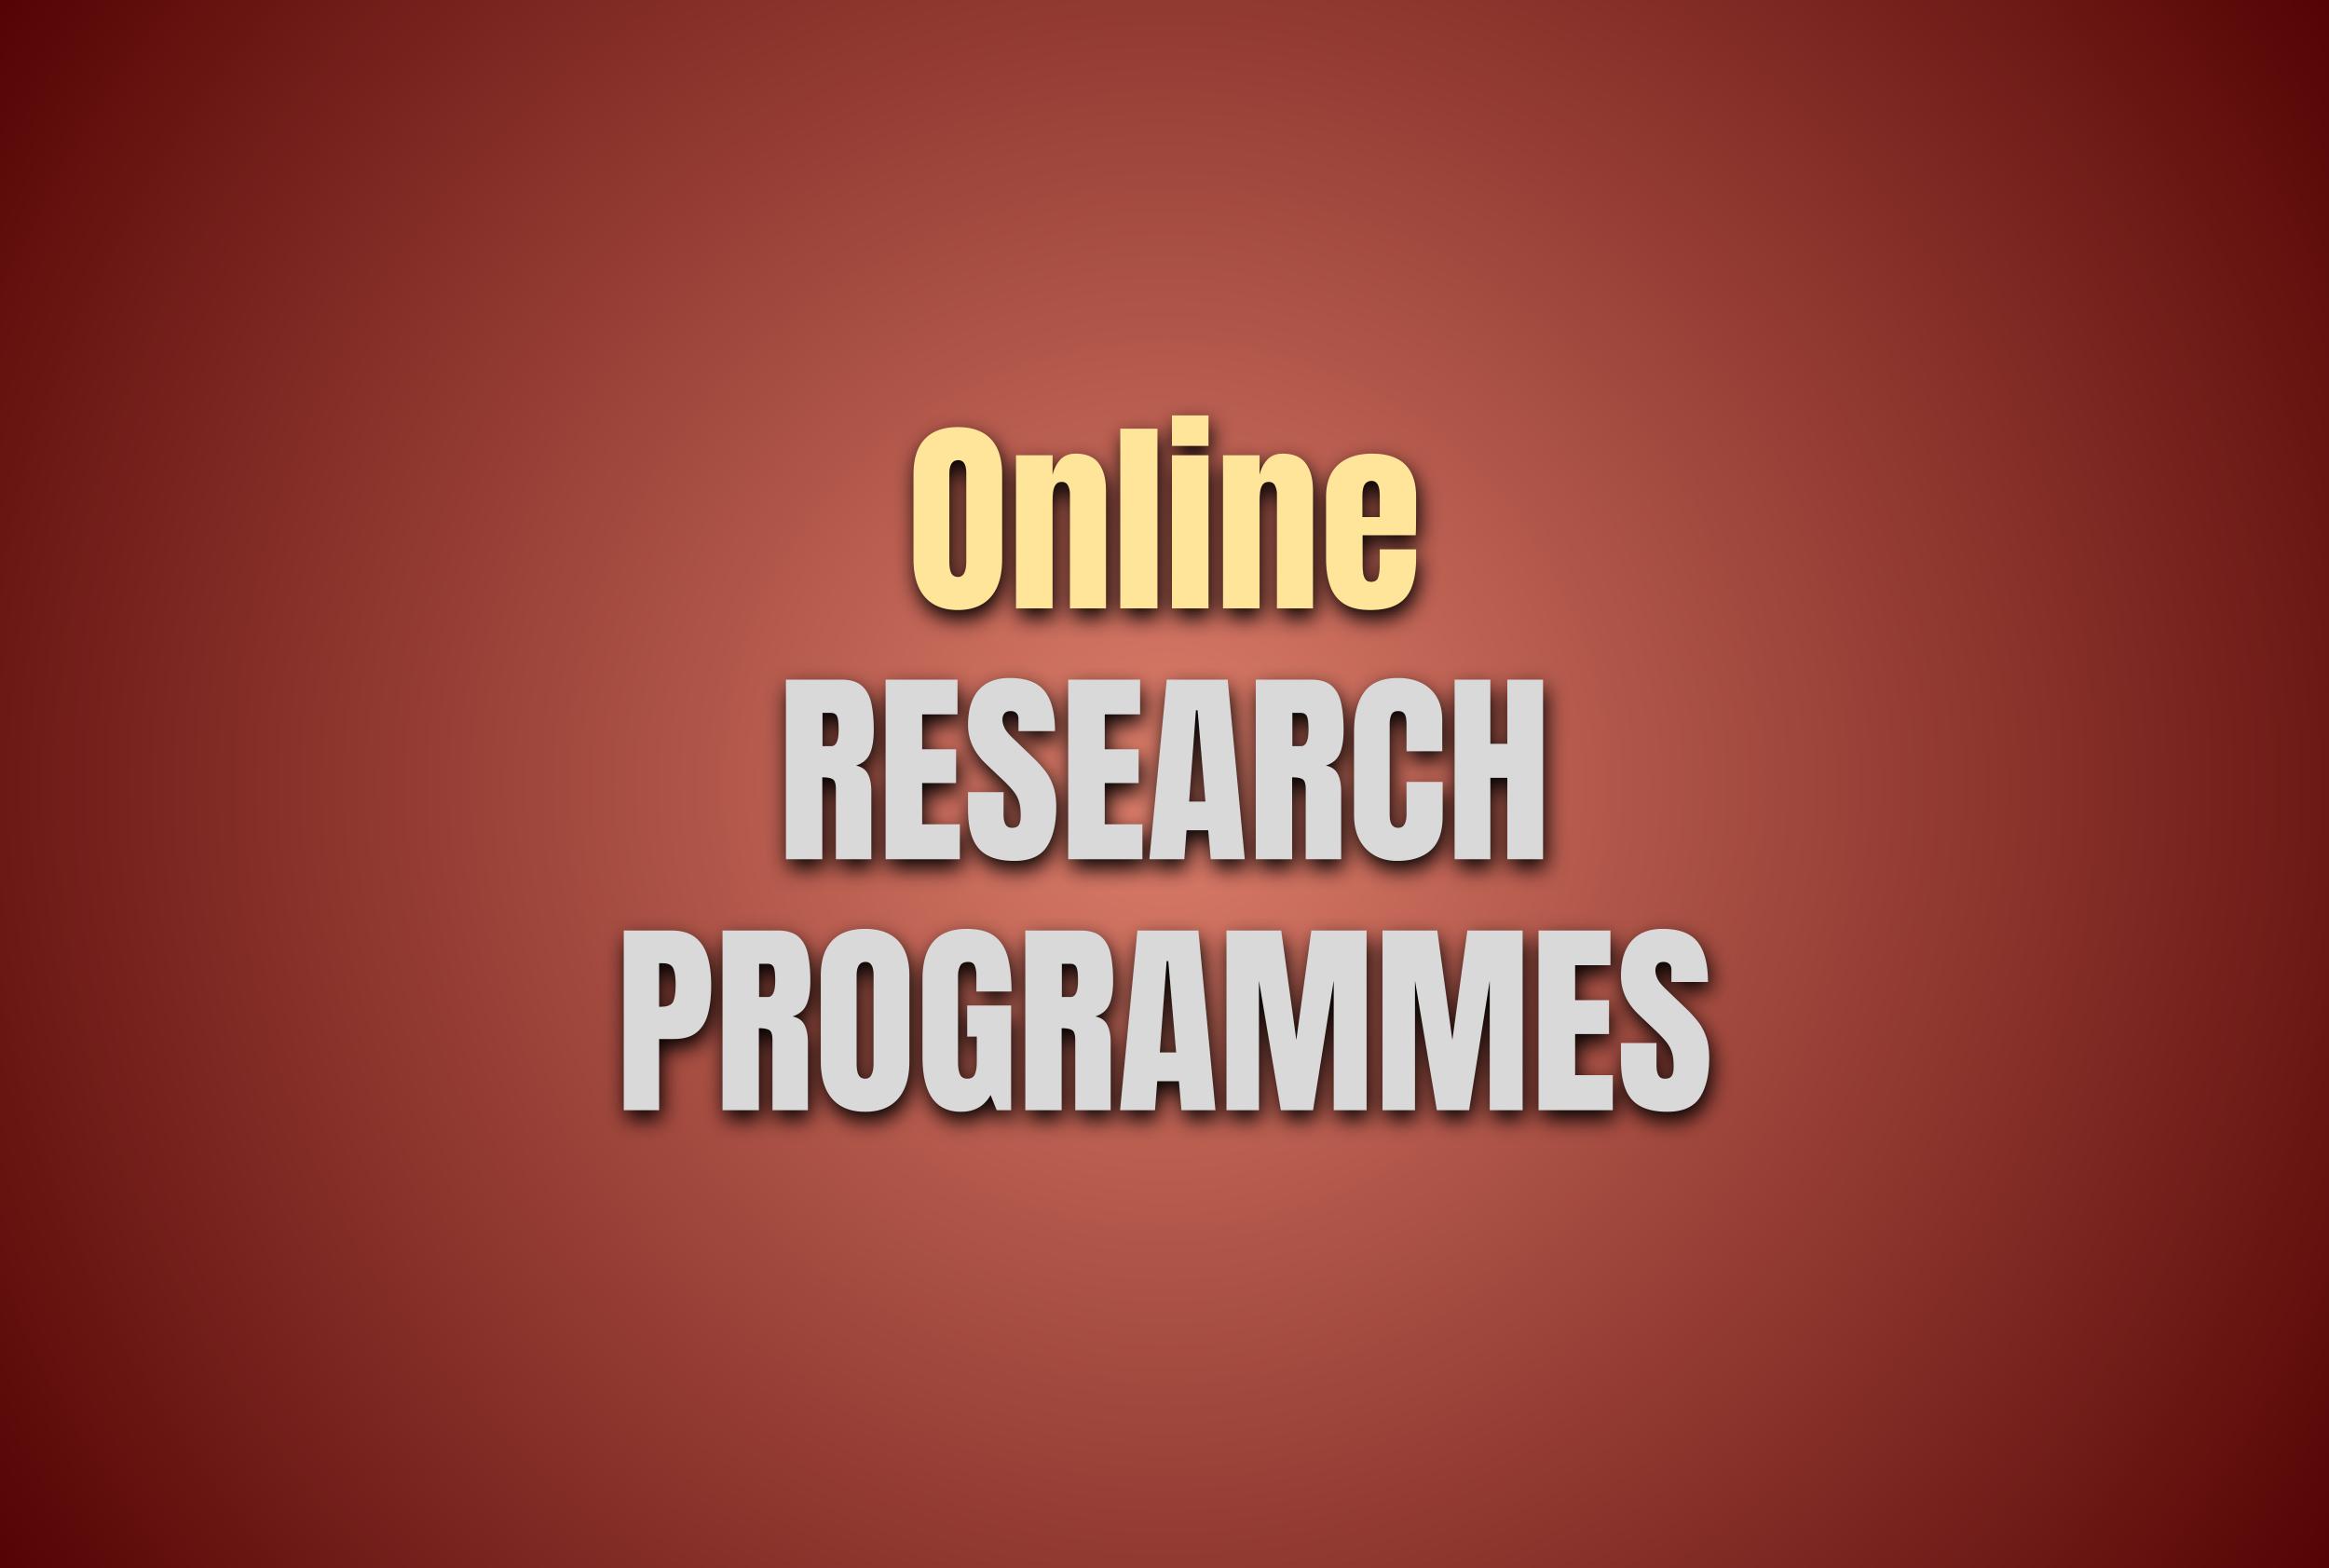 BioLim Online Research Programmes